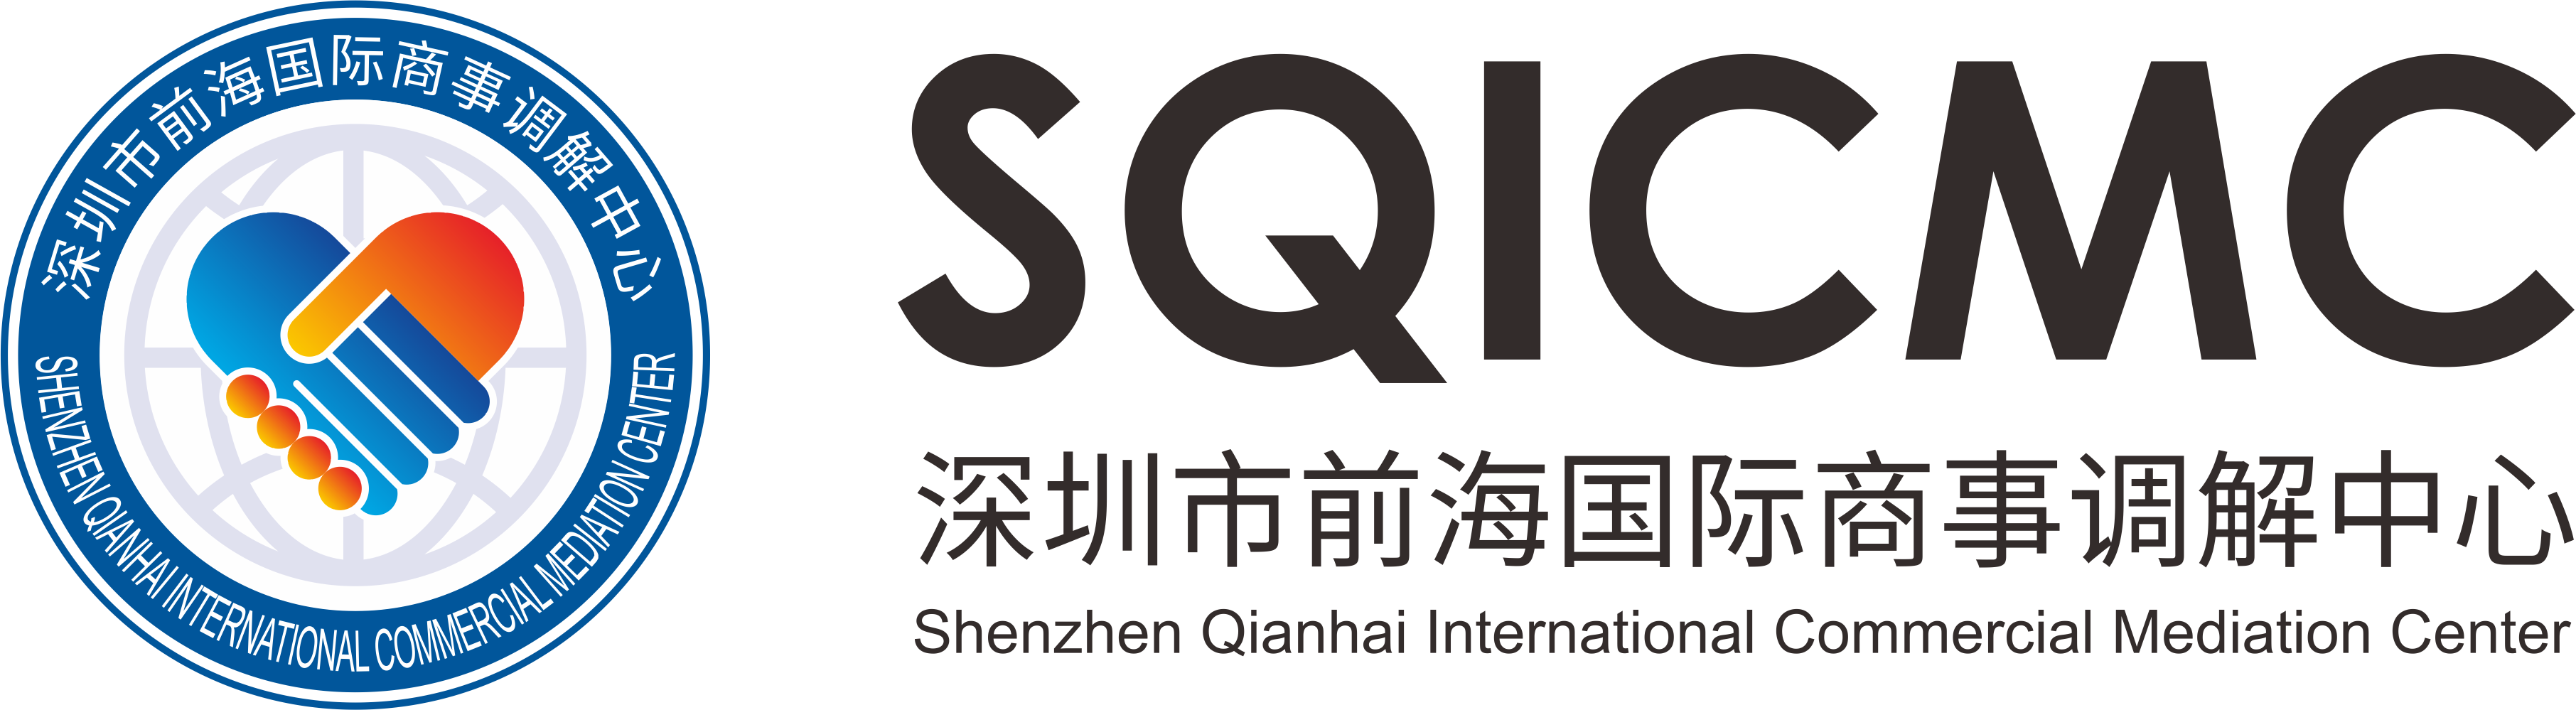 Shenzhen Qianhai Inteinational Commercial Mediation Centei